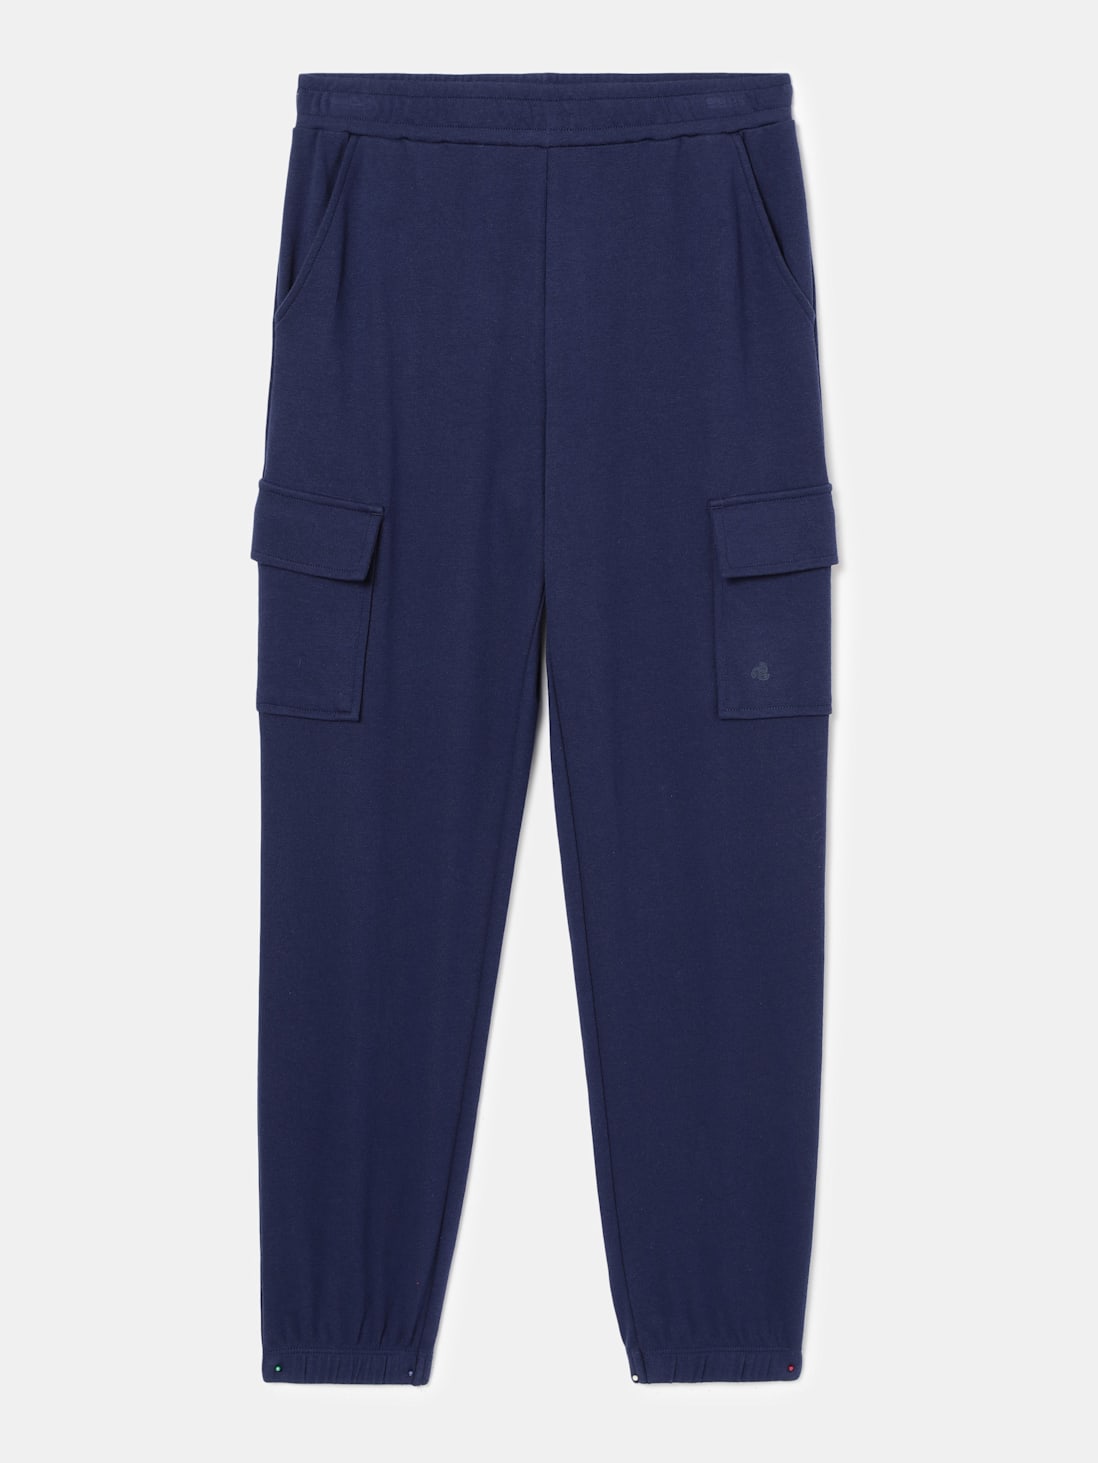 Buy Indigo Trousers & Pants for Men by JOCKEY Online | Ajio.com